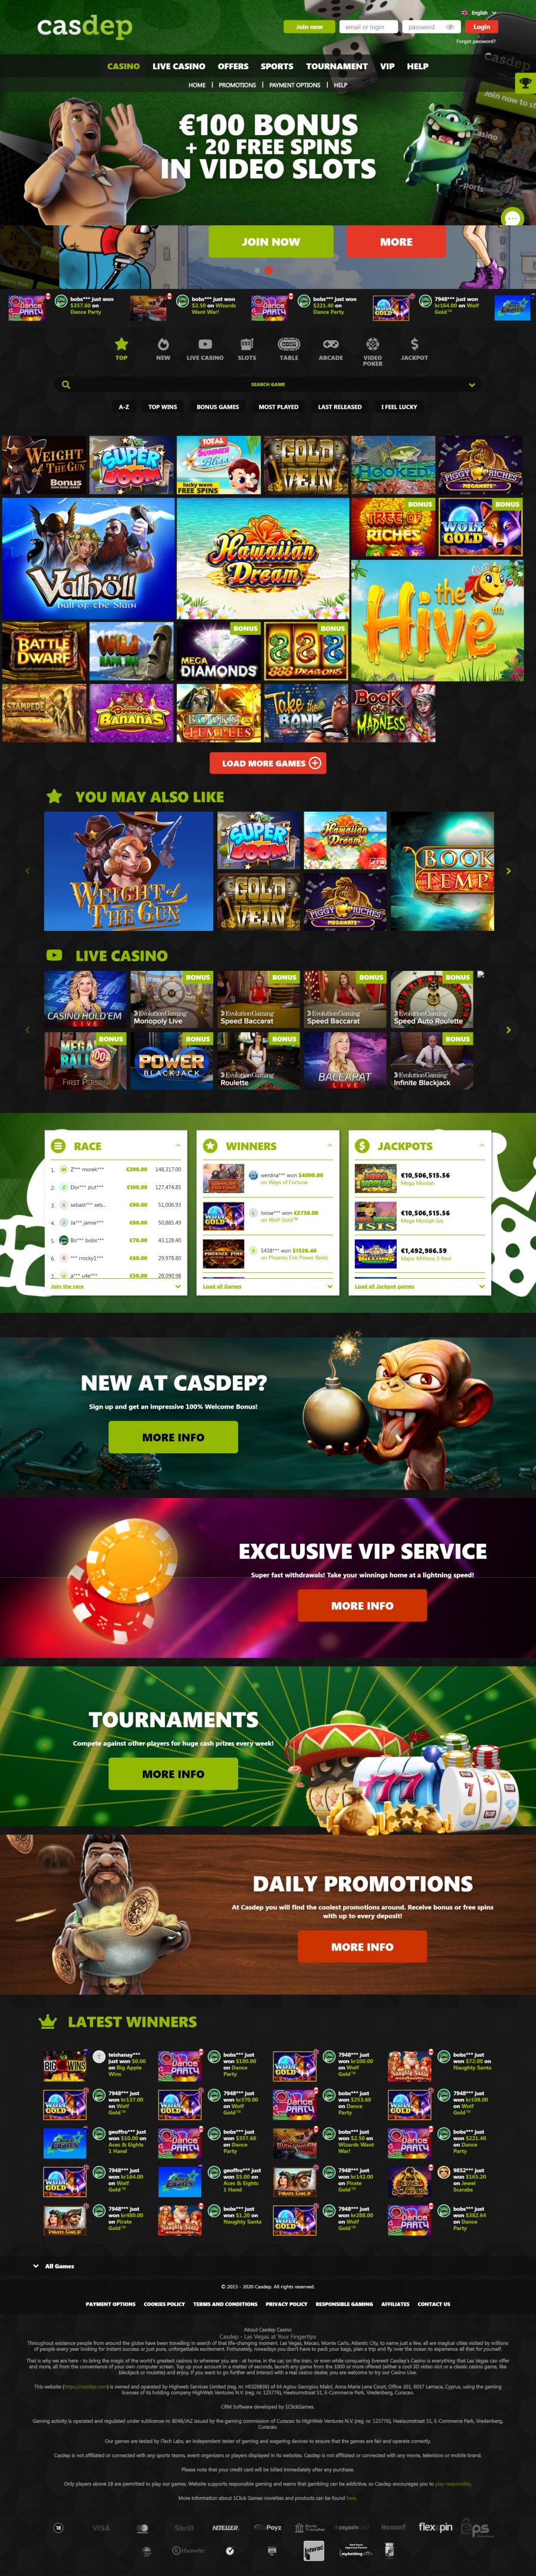 Casdep Casino  screenshot